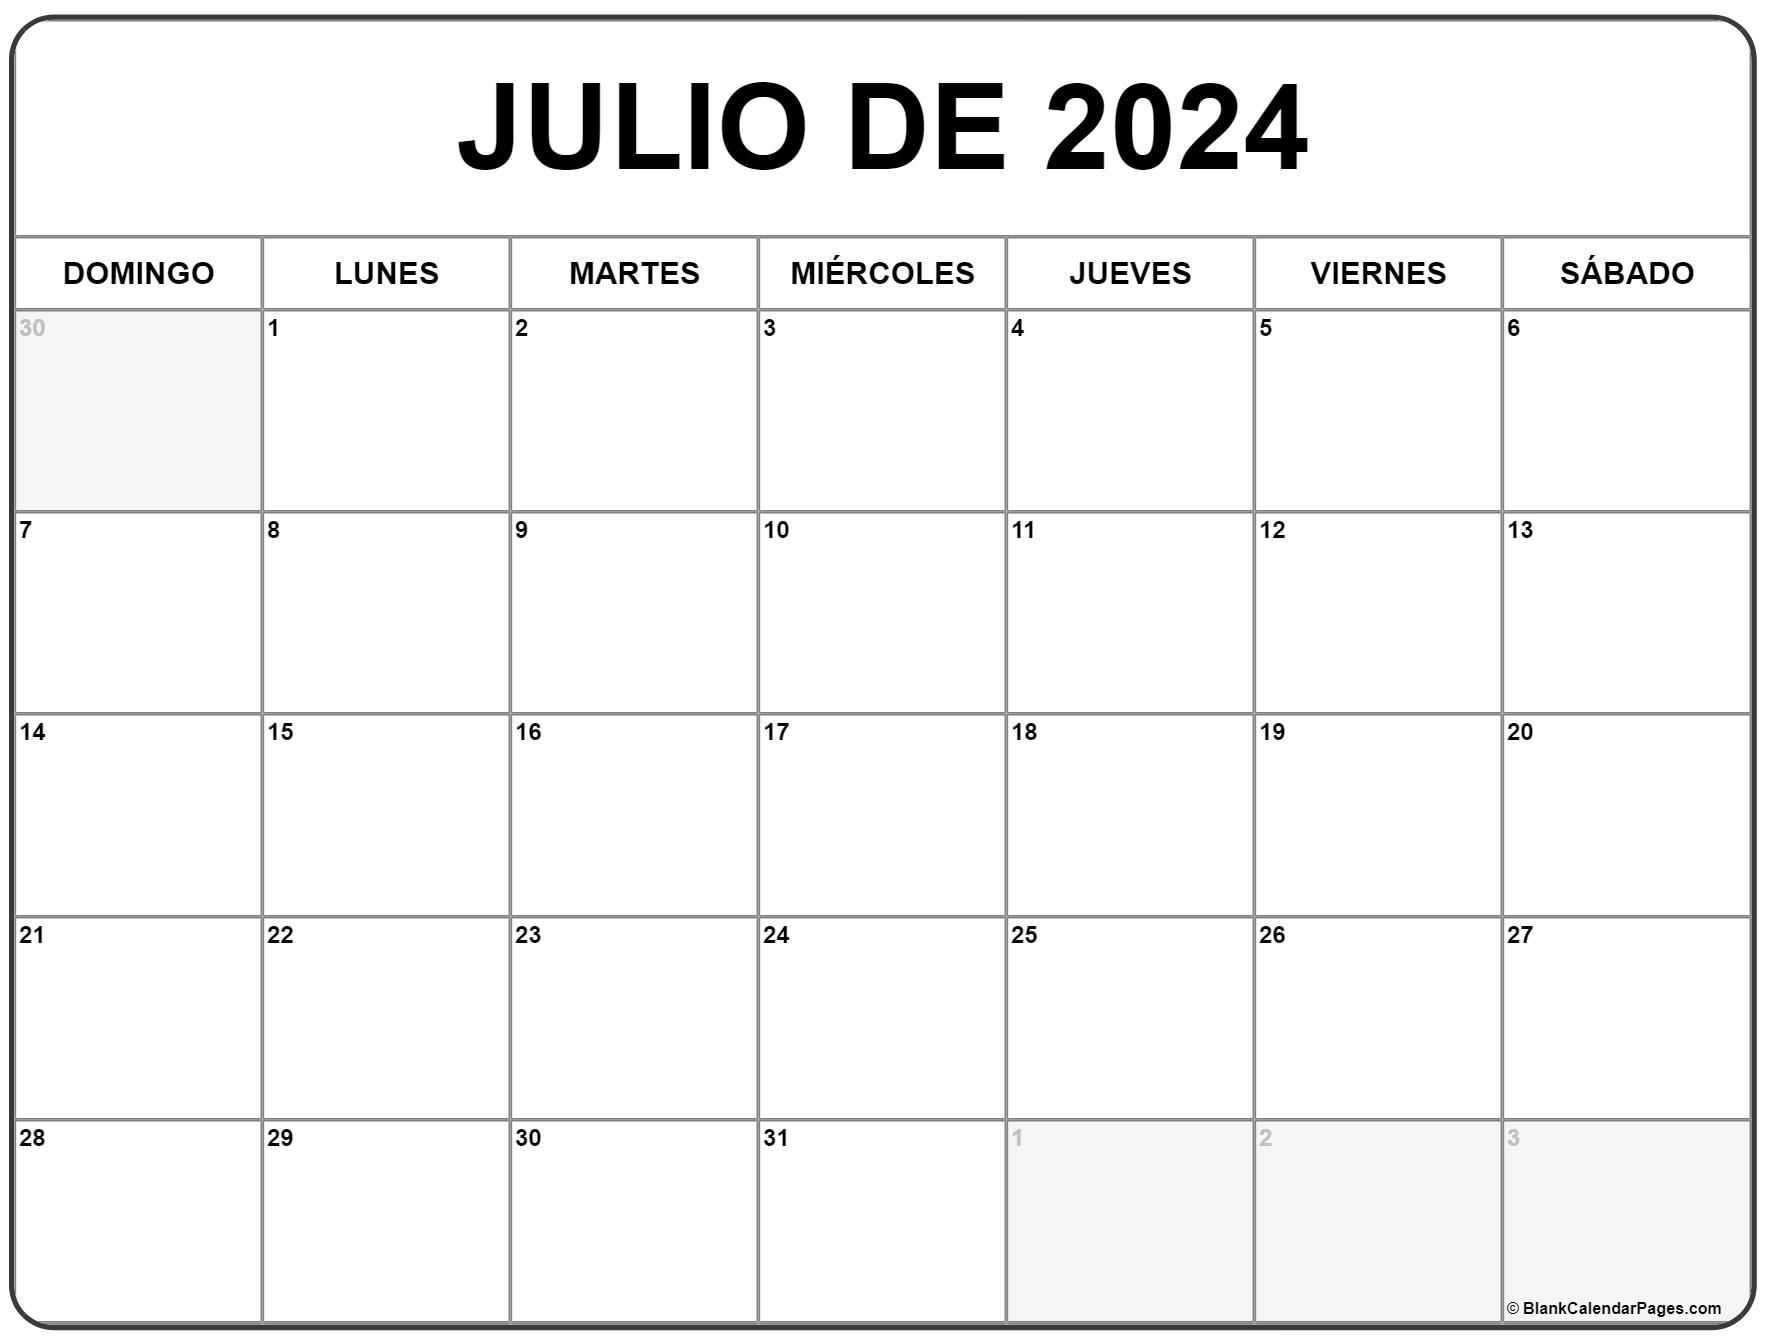 julio de 2024 calendario gratis Calendario julio